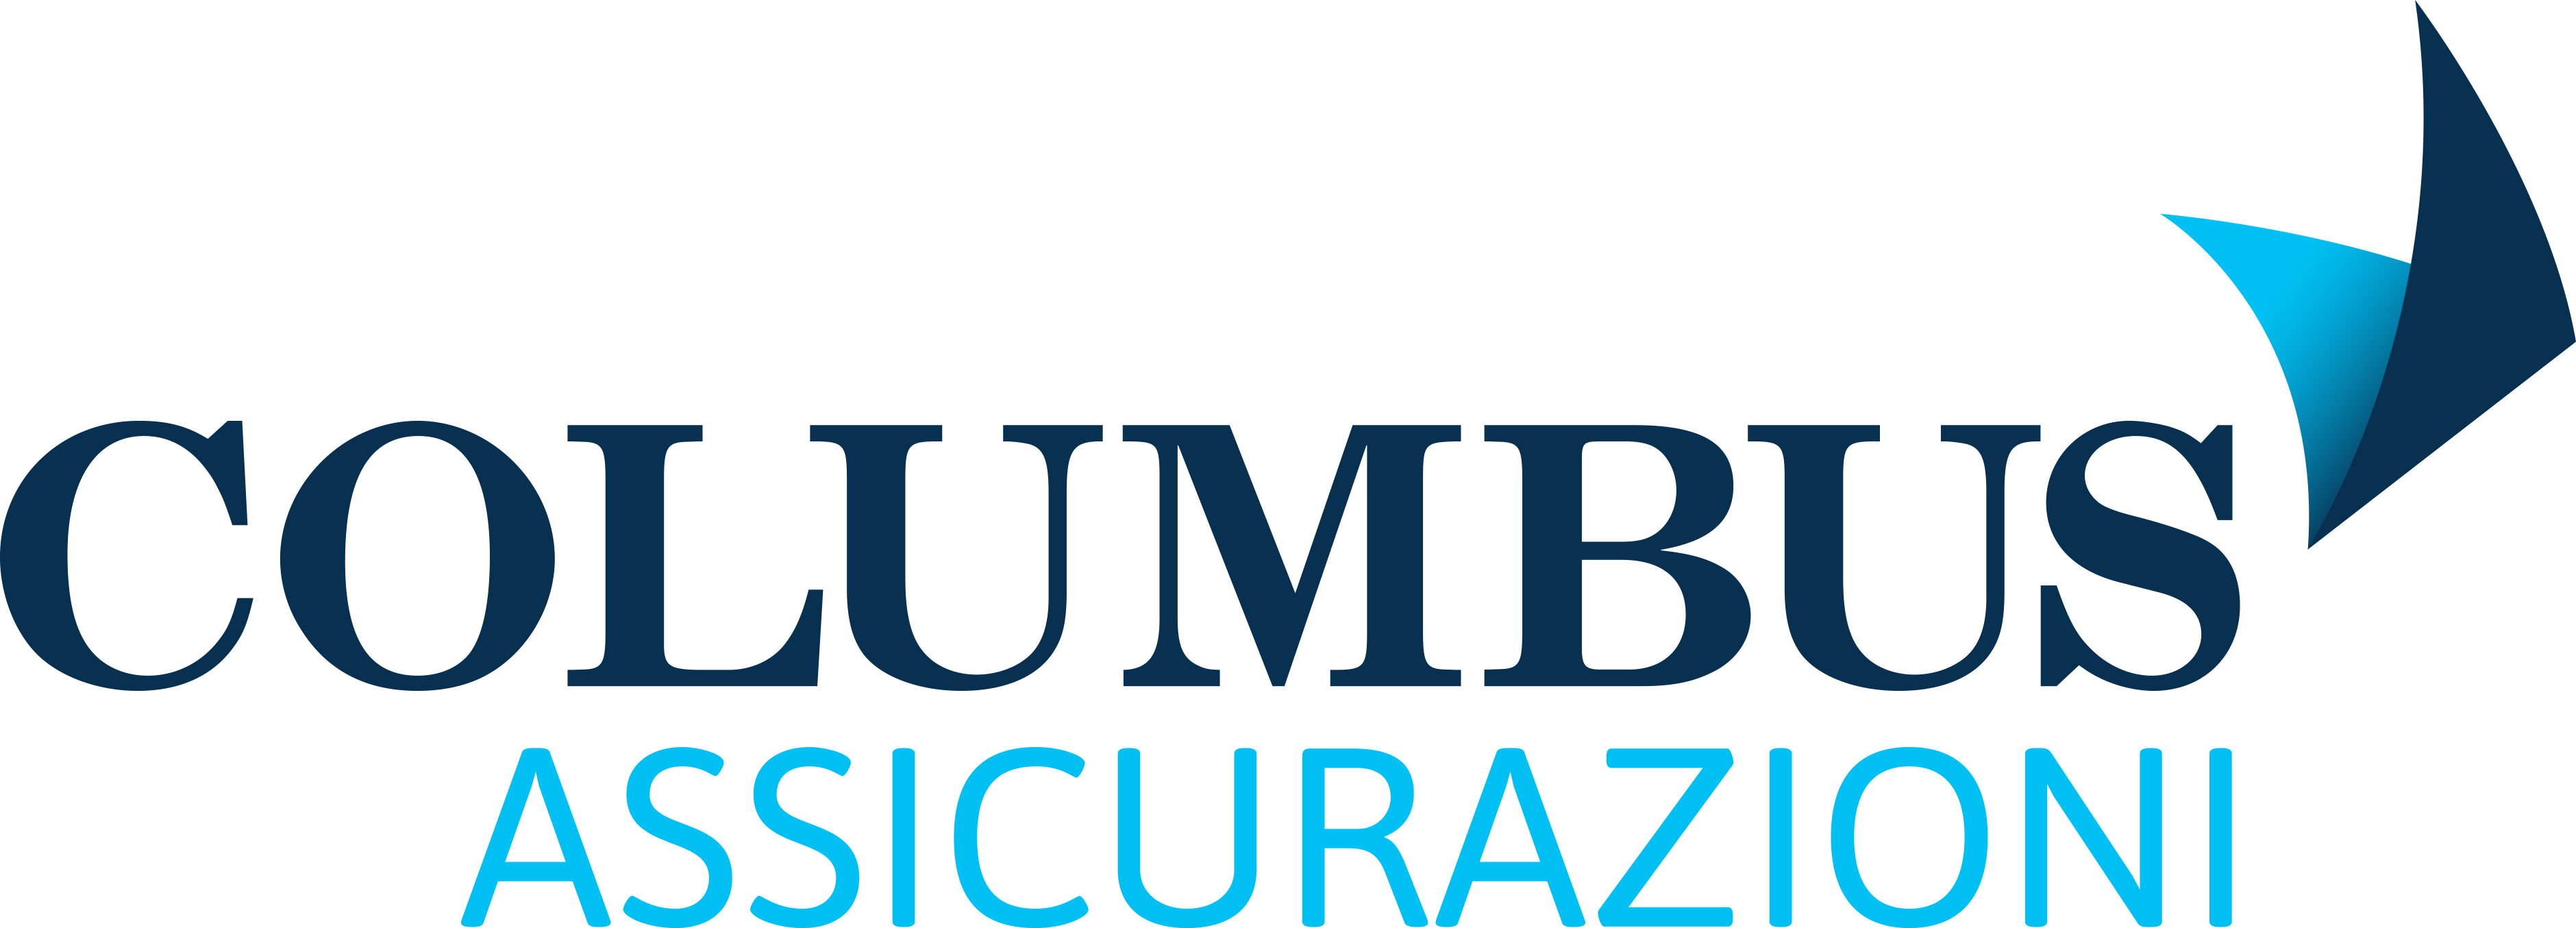 Columbus Assicurazioni_logo